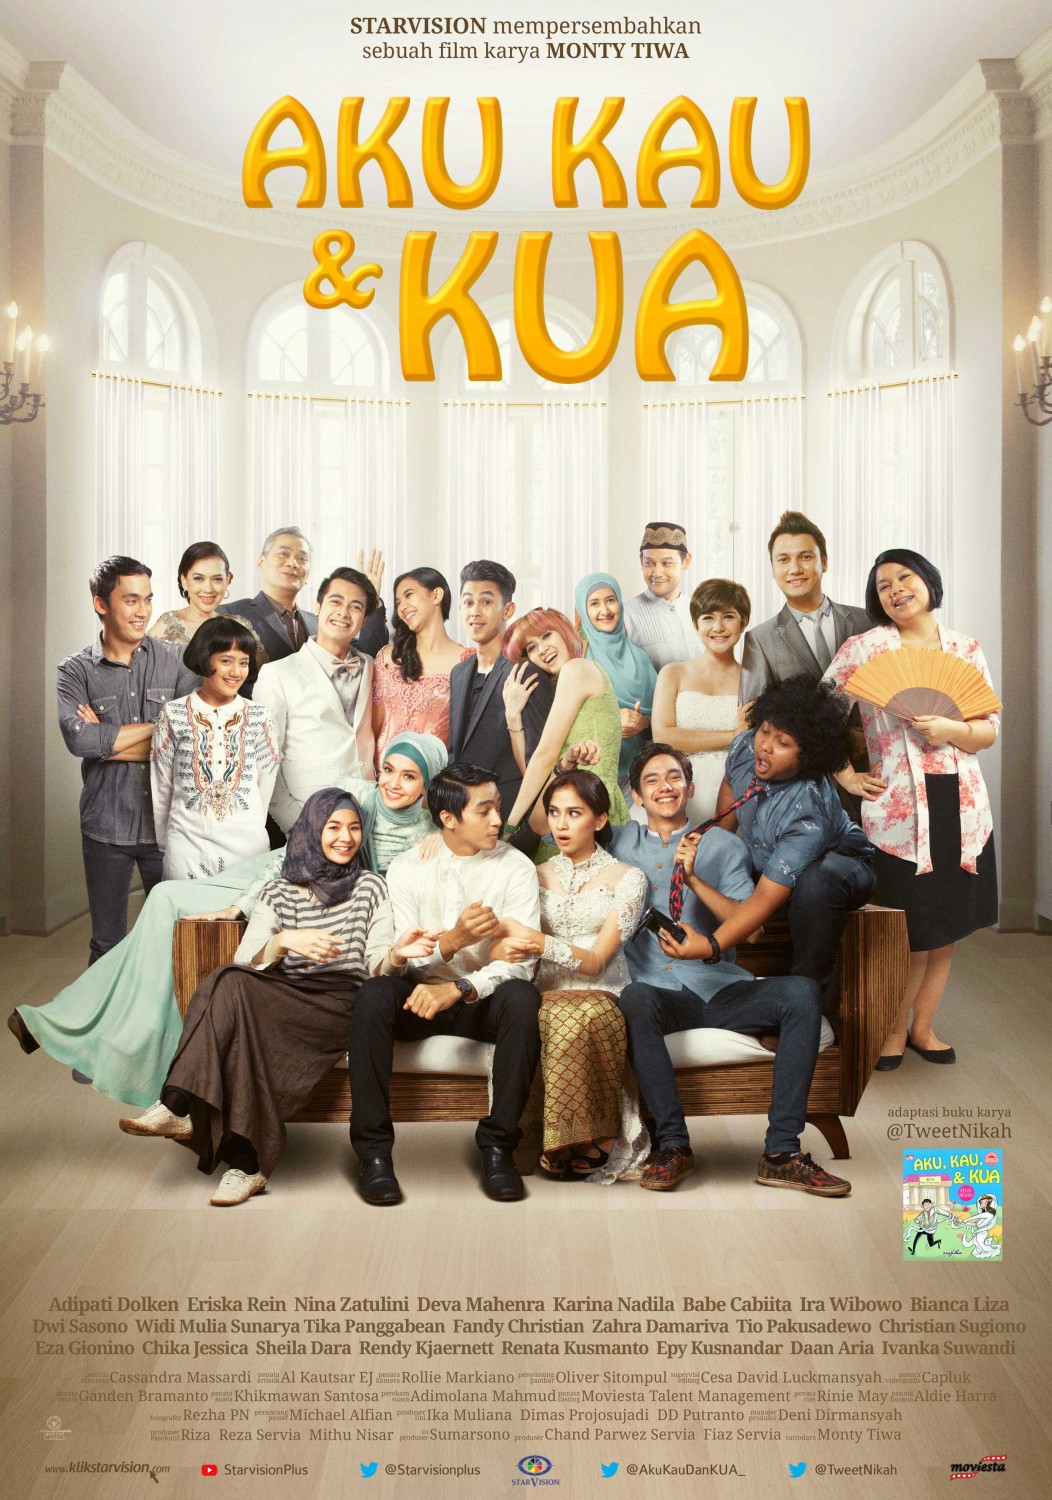 Extra Large Movie Poster Image for Aku Kau & Kua 